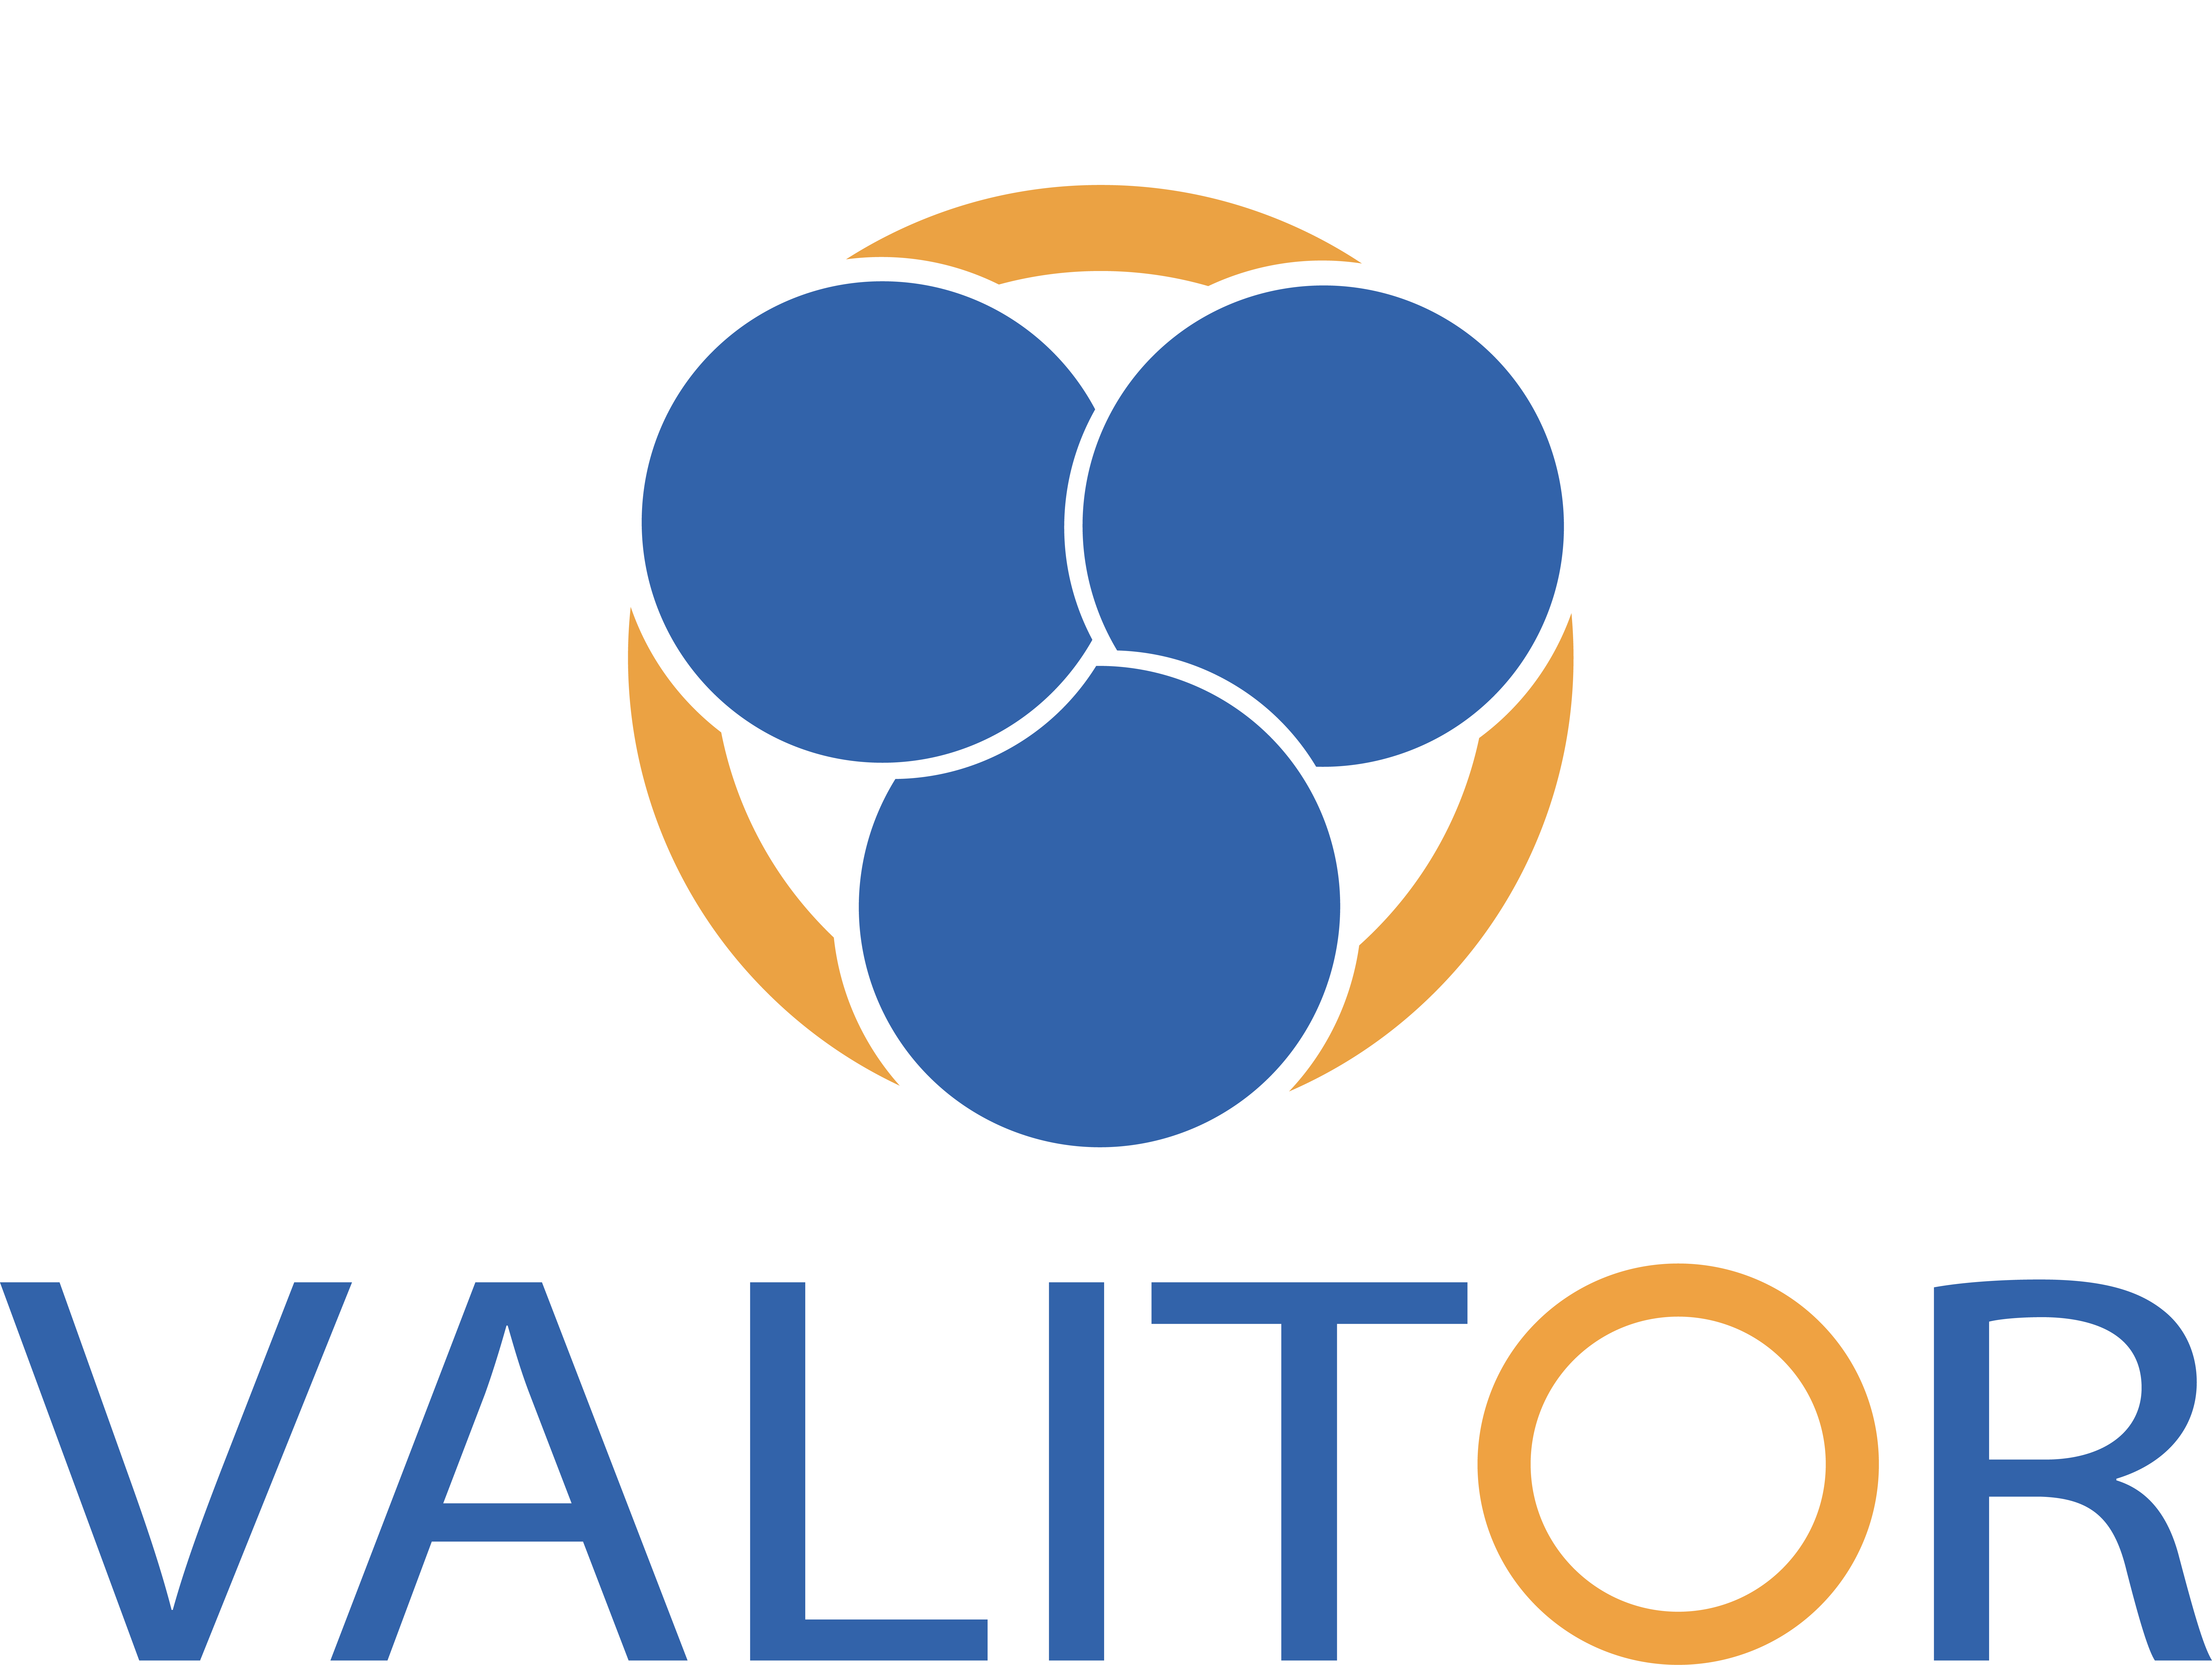 Valitor Logo